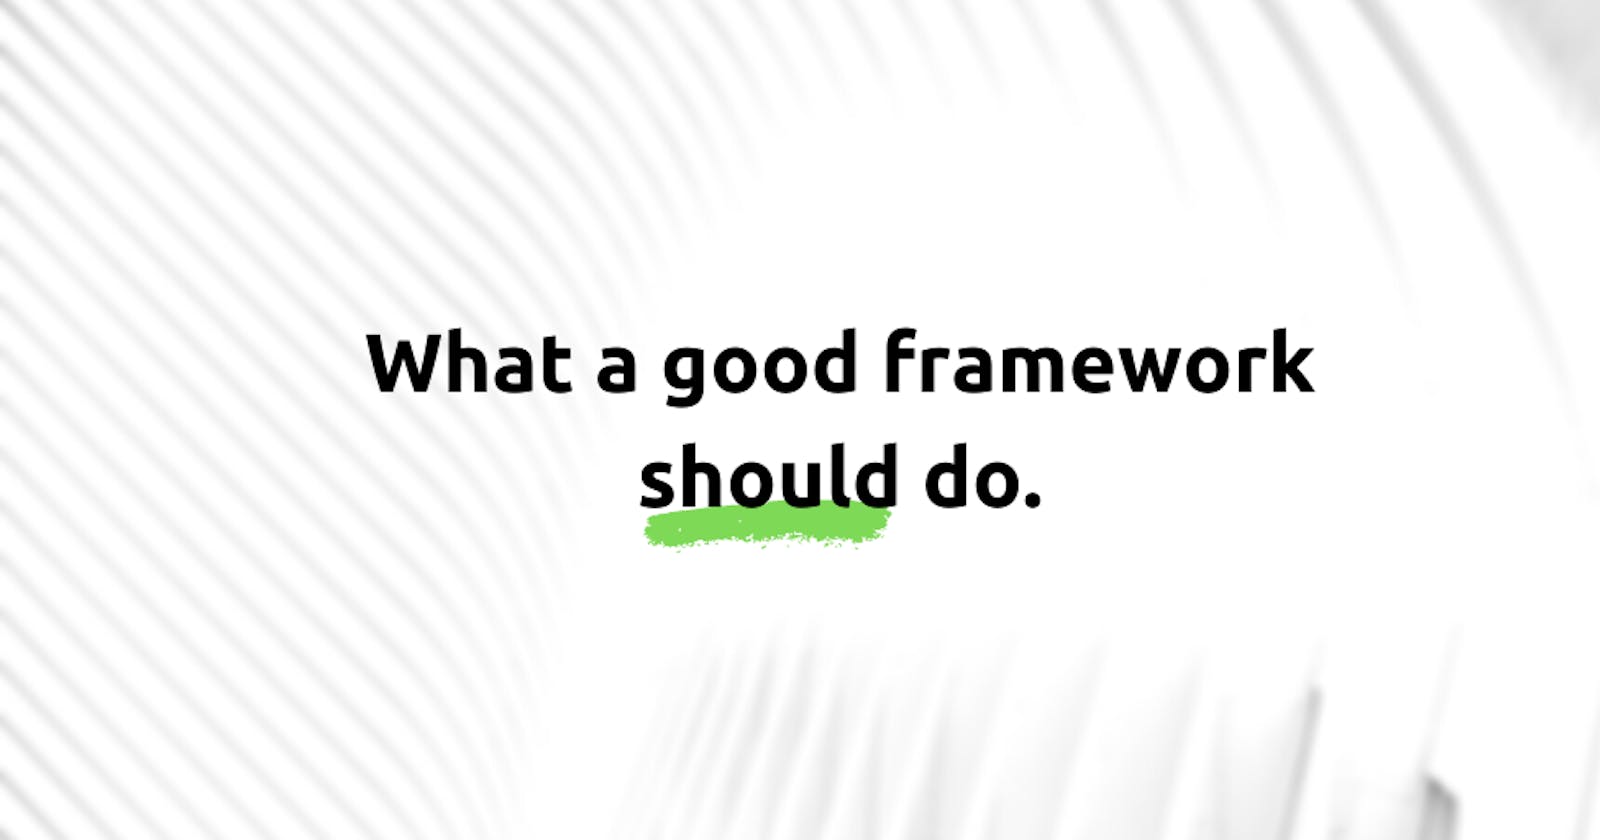 What a good framework SHOULD do